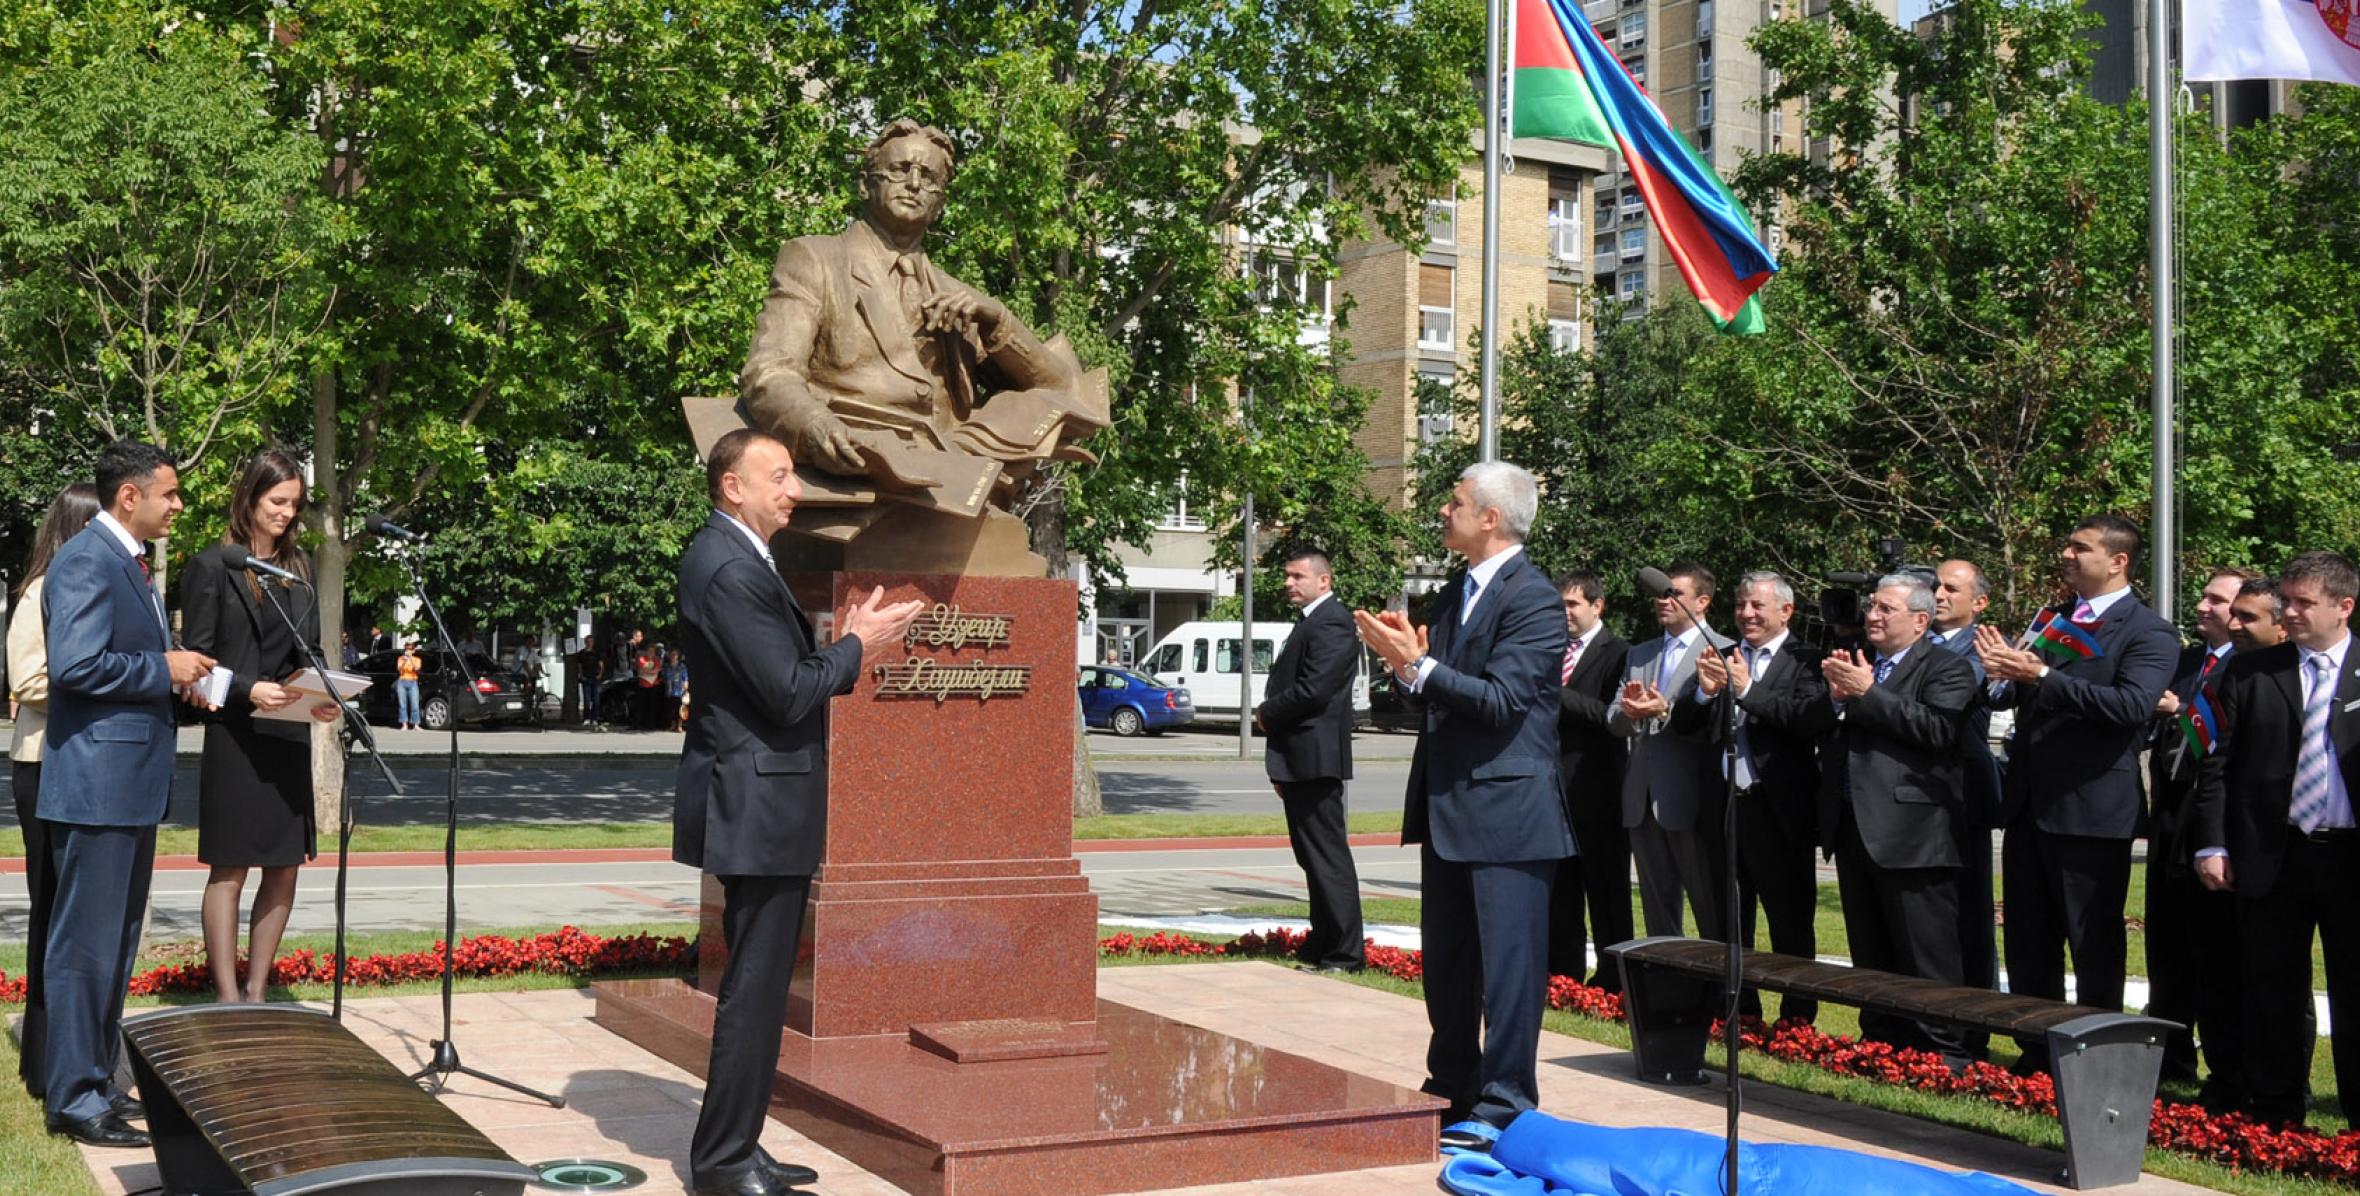 Ilham Aliyev and Serbian President Boris Tadic unveiled a bust to Uzeyir Hajibayli in the town of Novi Sad